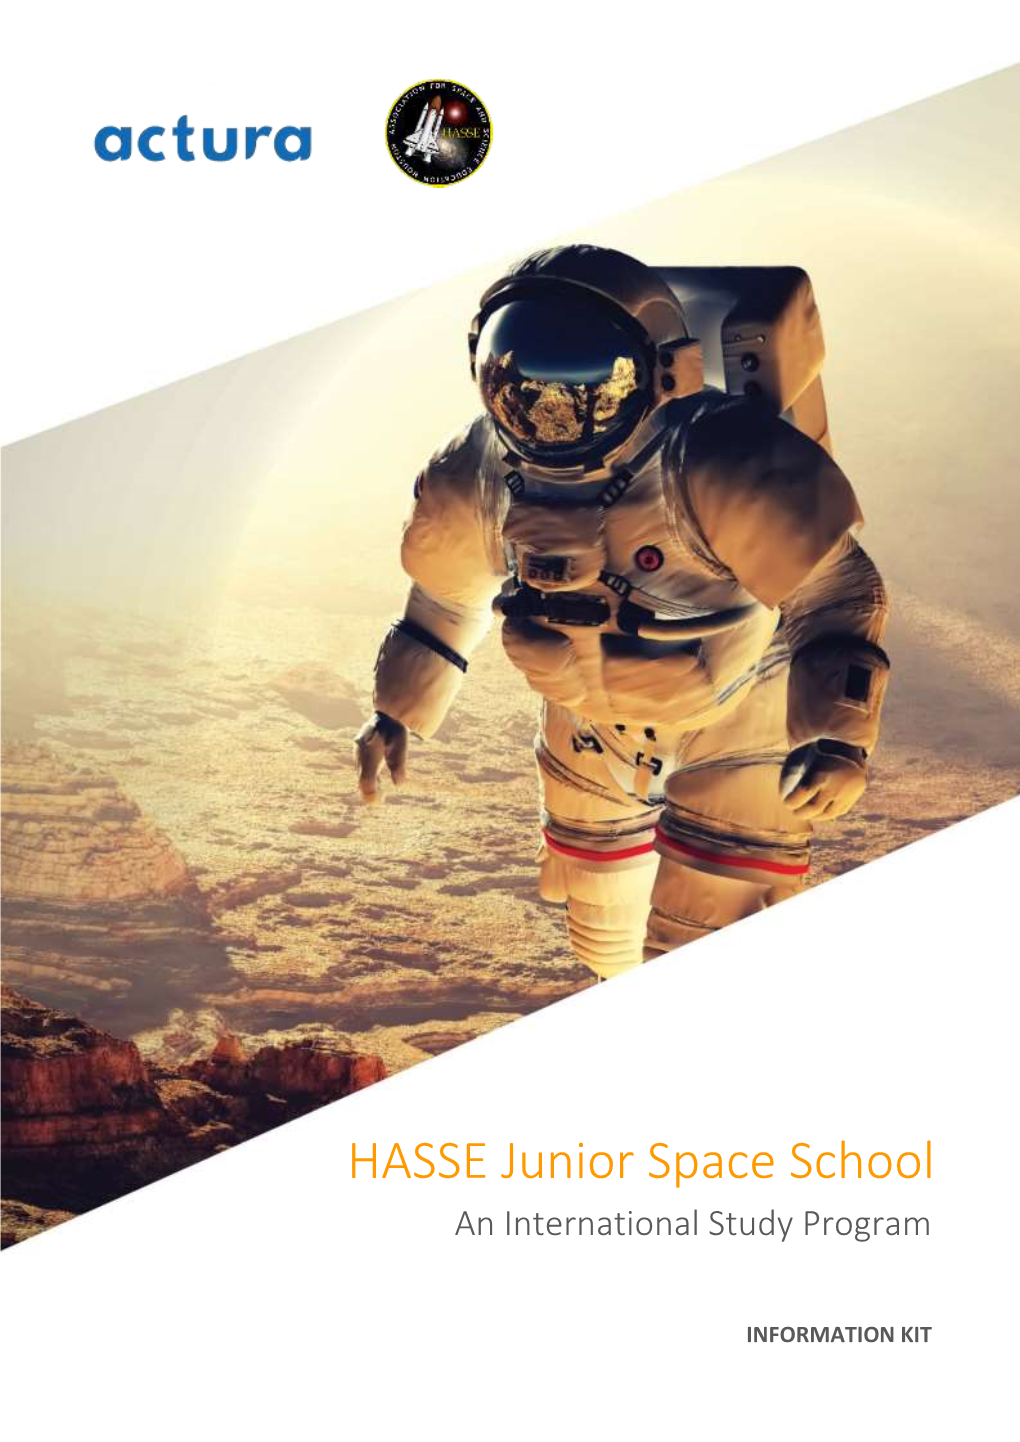 HASSE Junior Space School an International Study Program